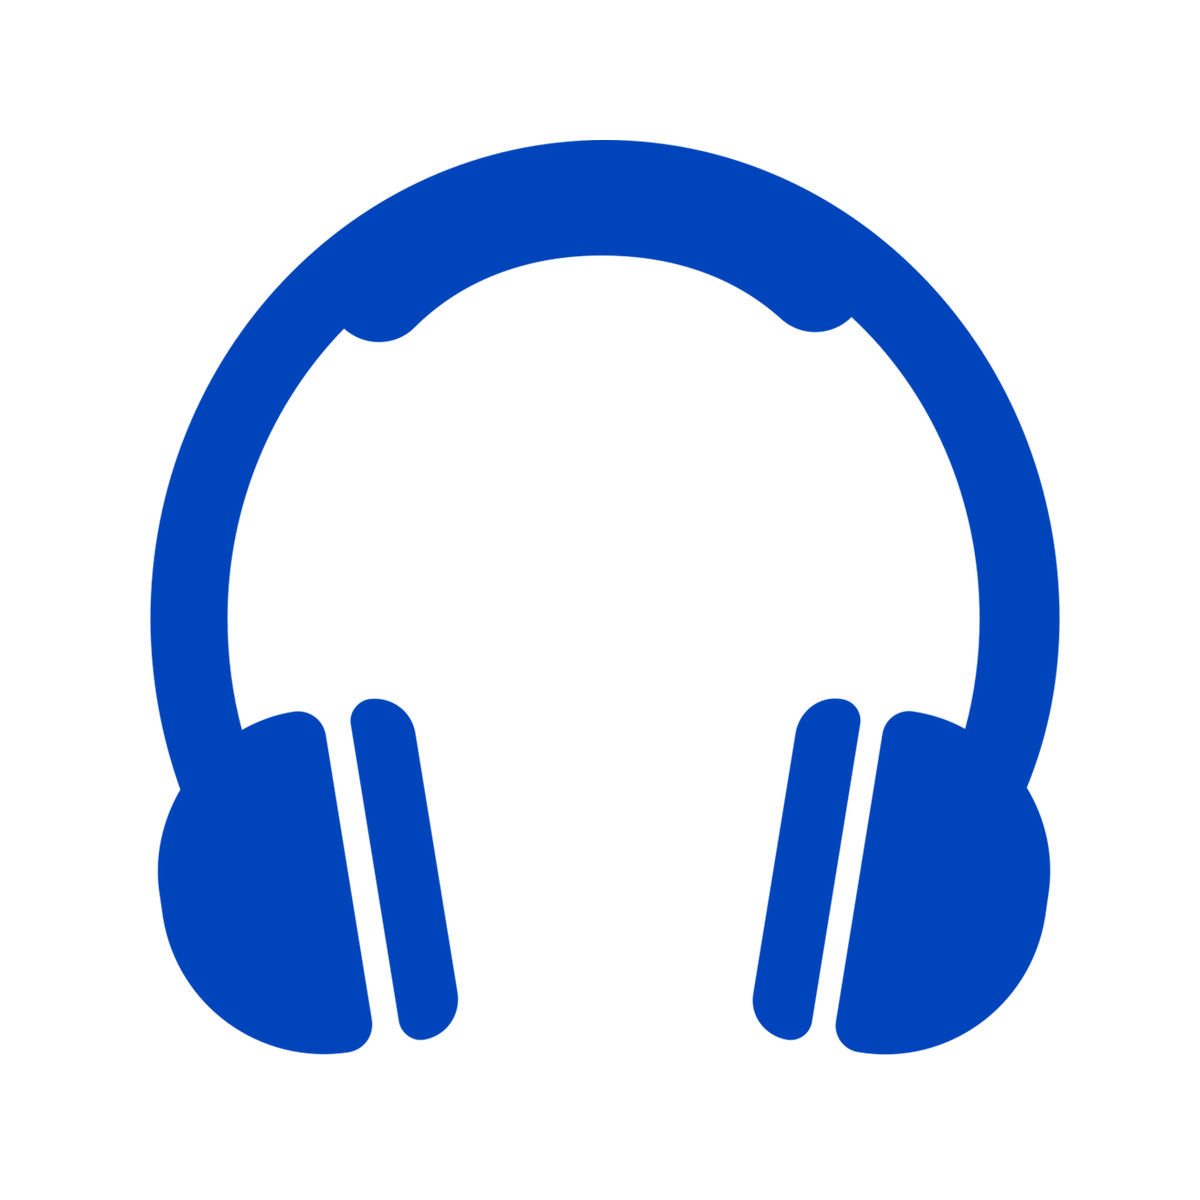 An icon of headphones